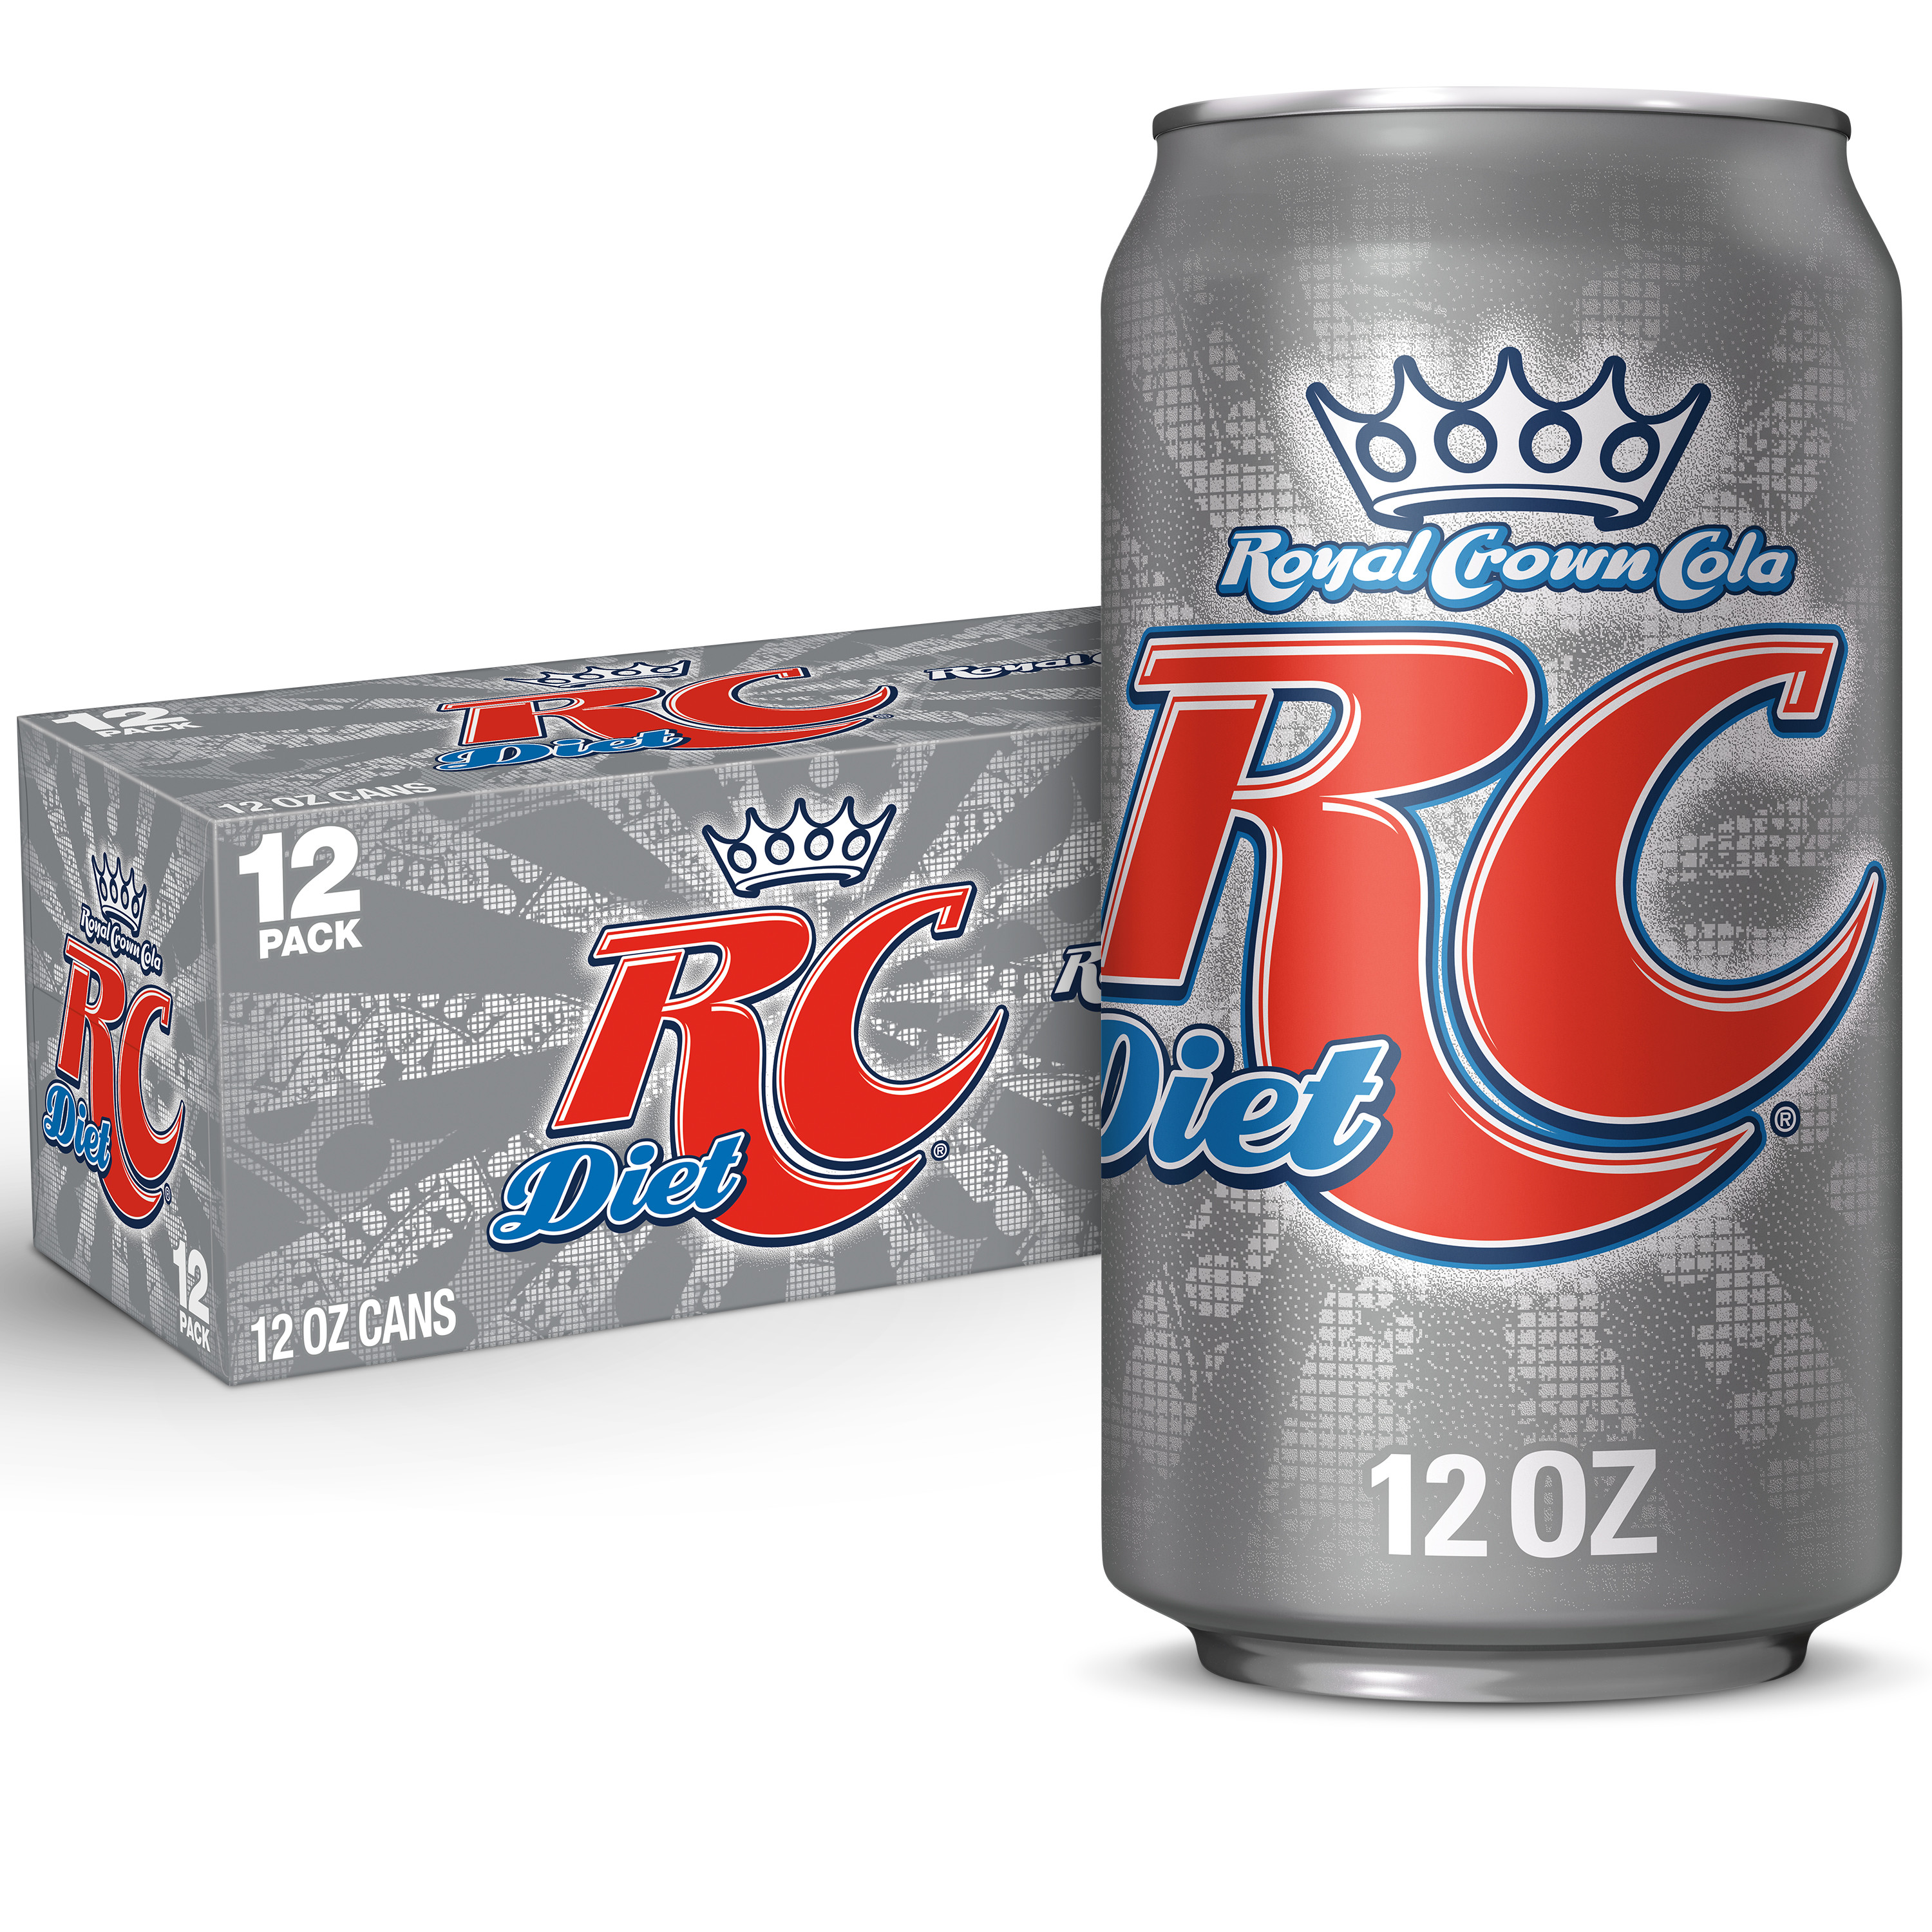 Diet RC Cola Soda Pop, 12 fl oz, 12 Pack Cans - image 1 of 10